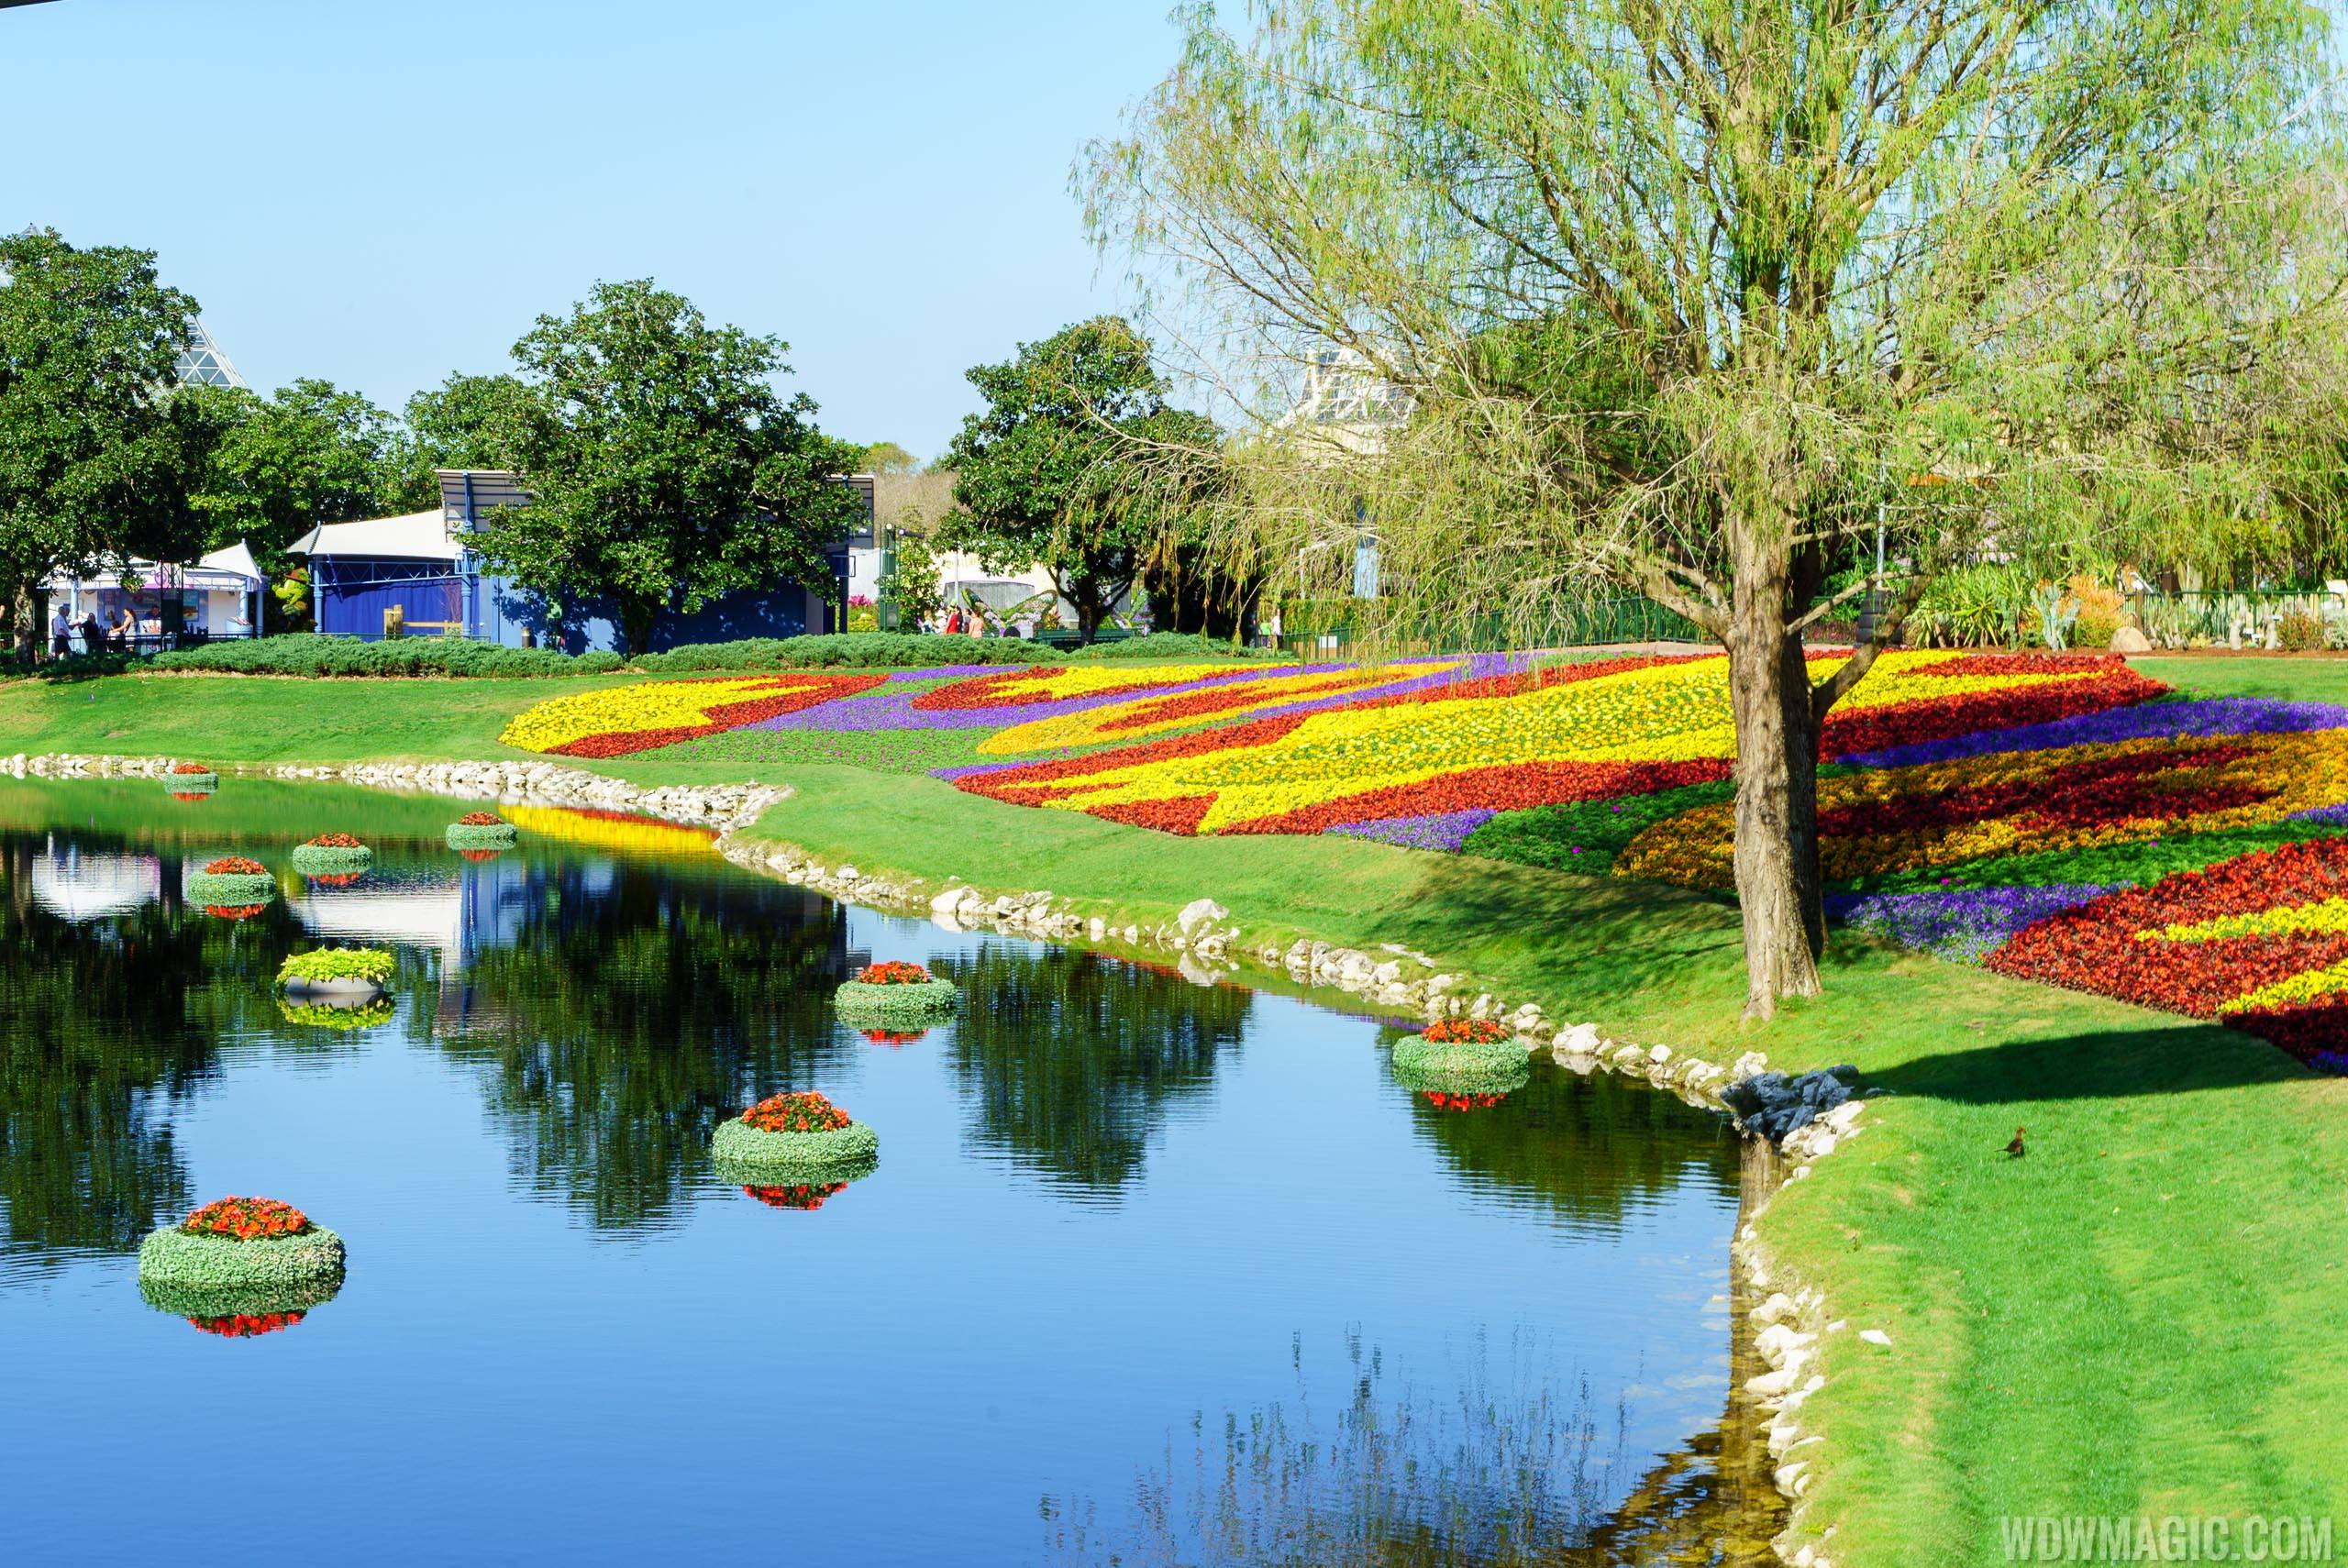 2016 Epcot International Flower and Garden Festival - Future World floral beds